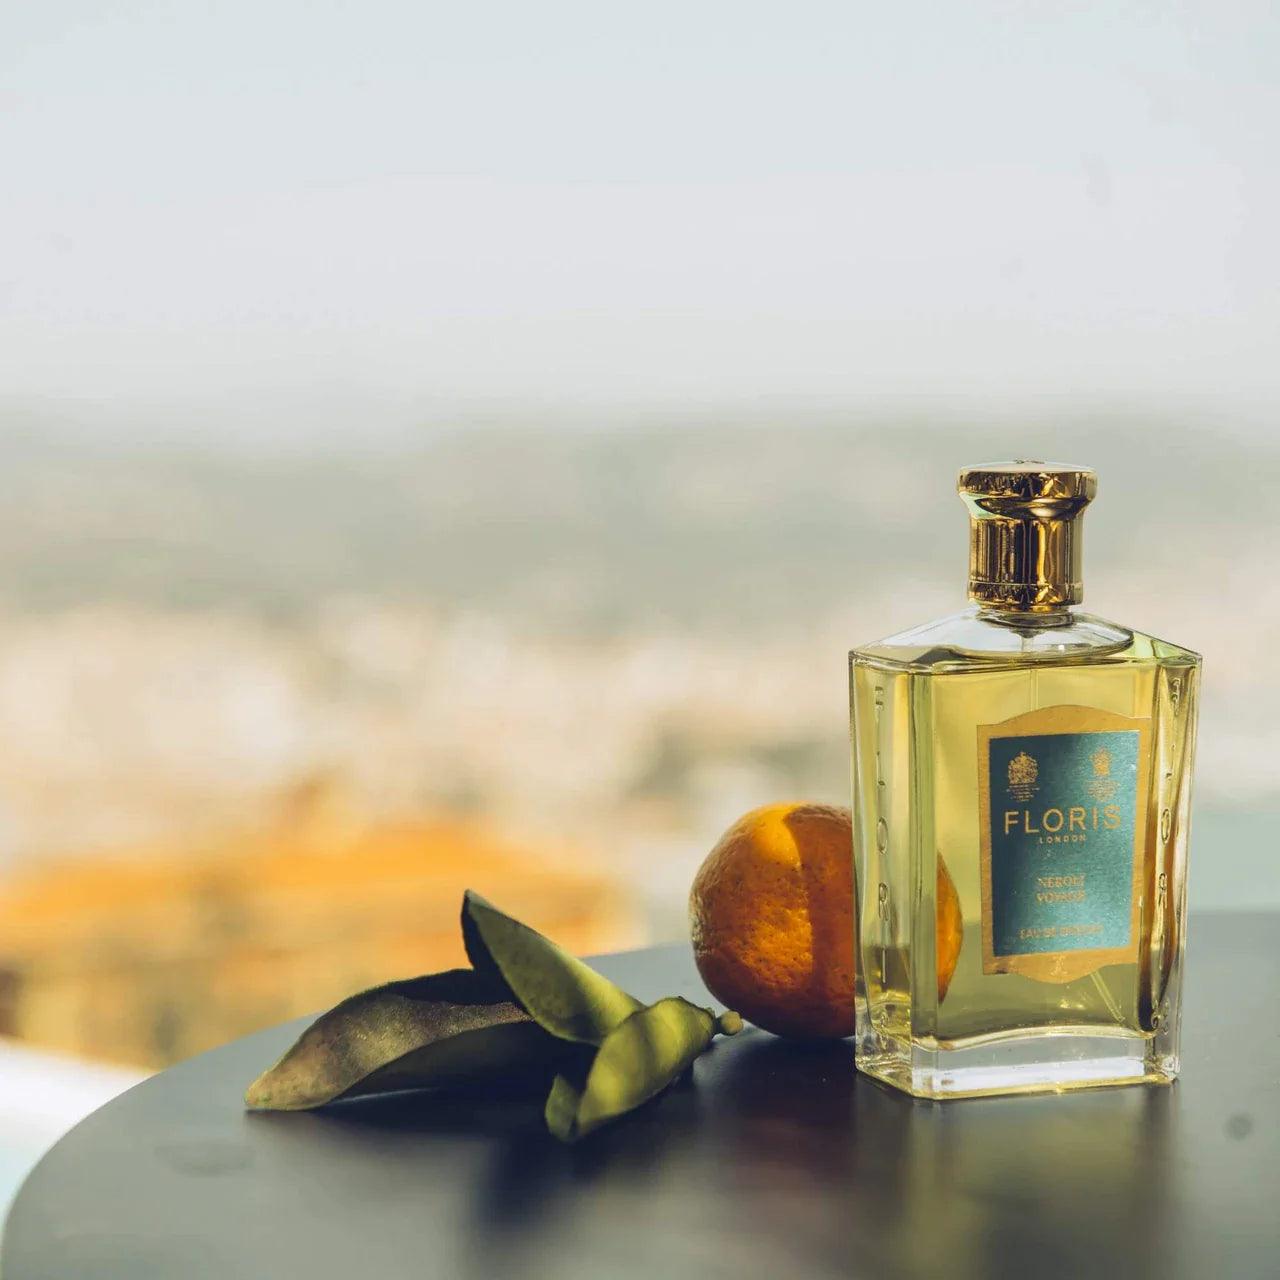 Floris Neroli Voyage, Eau de Parfum, 10 ml | Parfyme | Floris London | JK SHOP | JK Barber og herre frisør | Lavepriser | Best